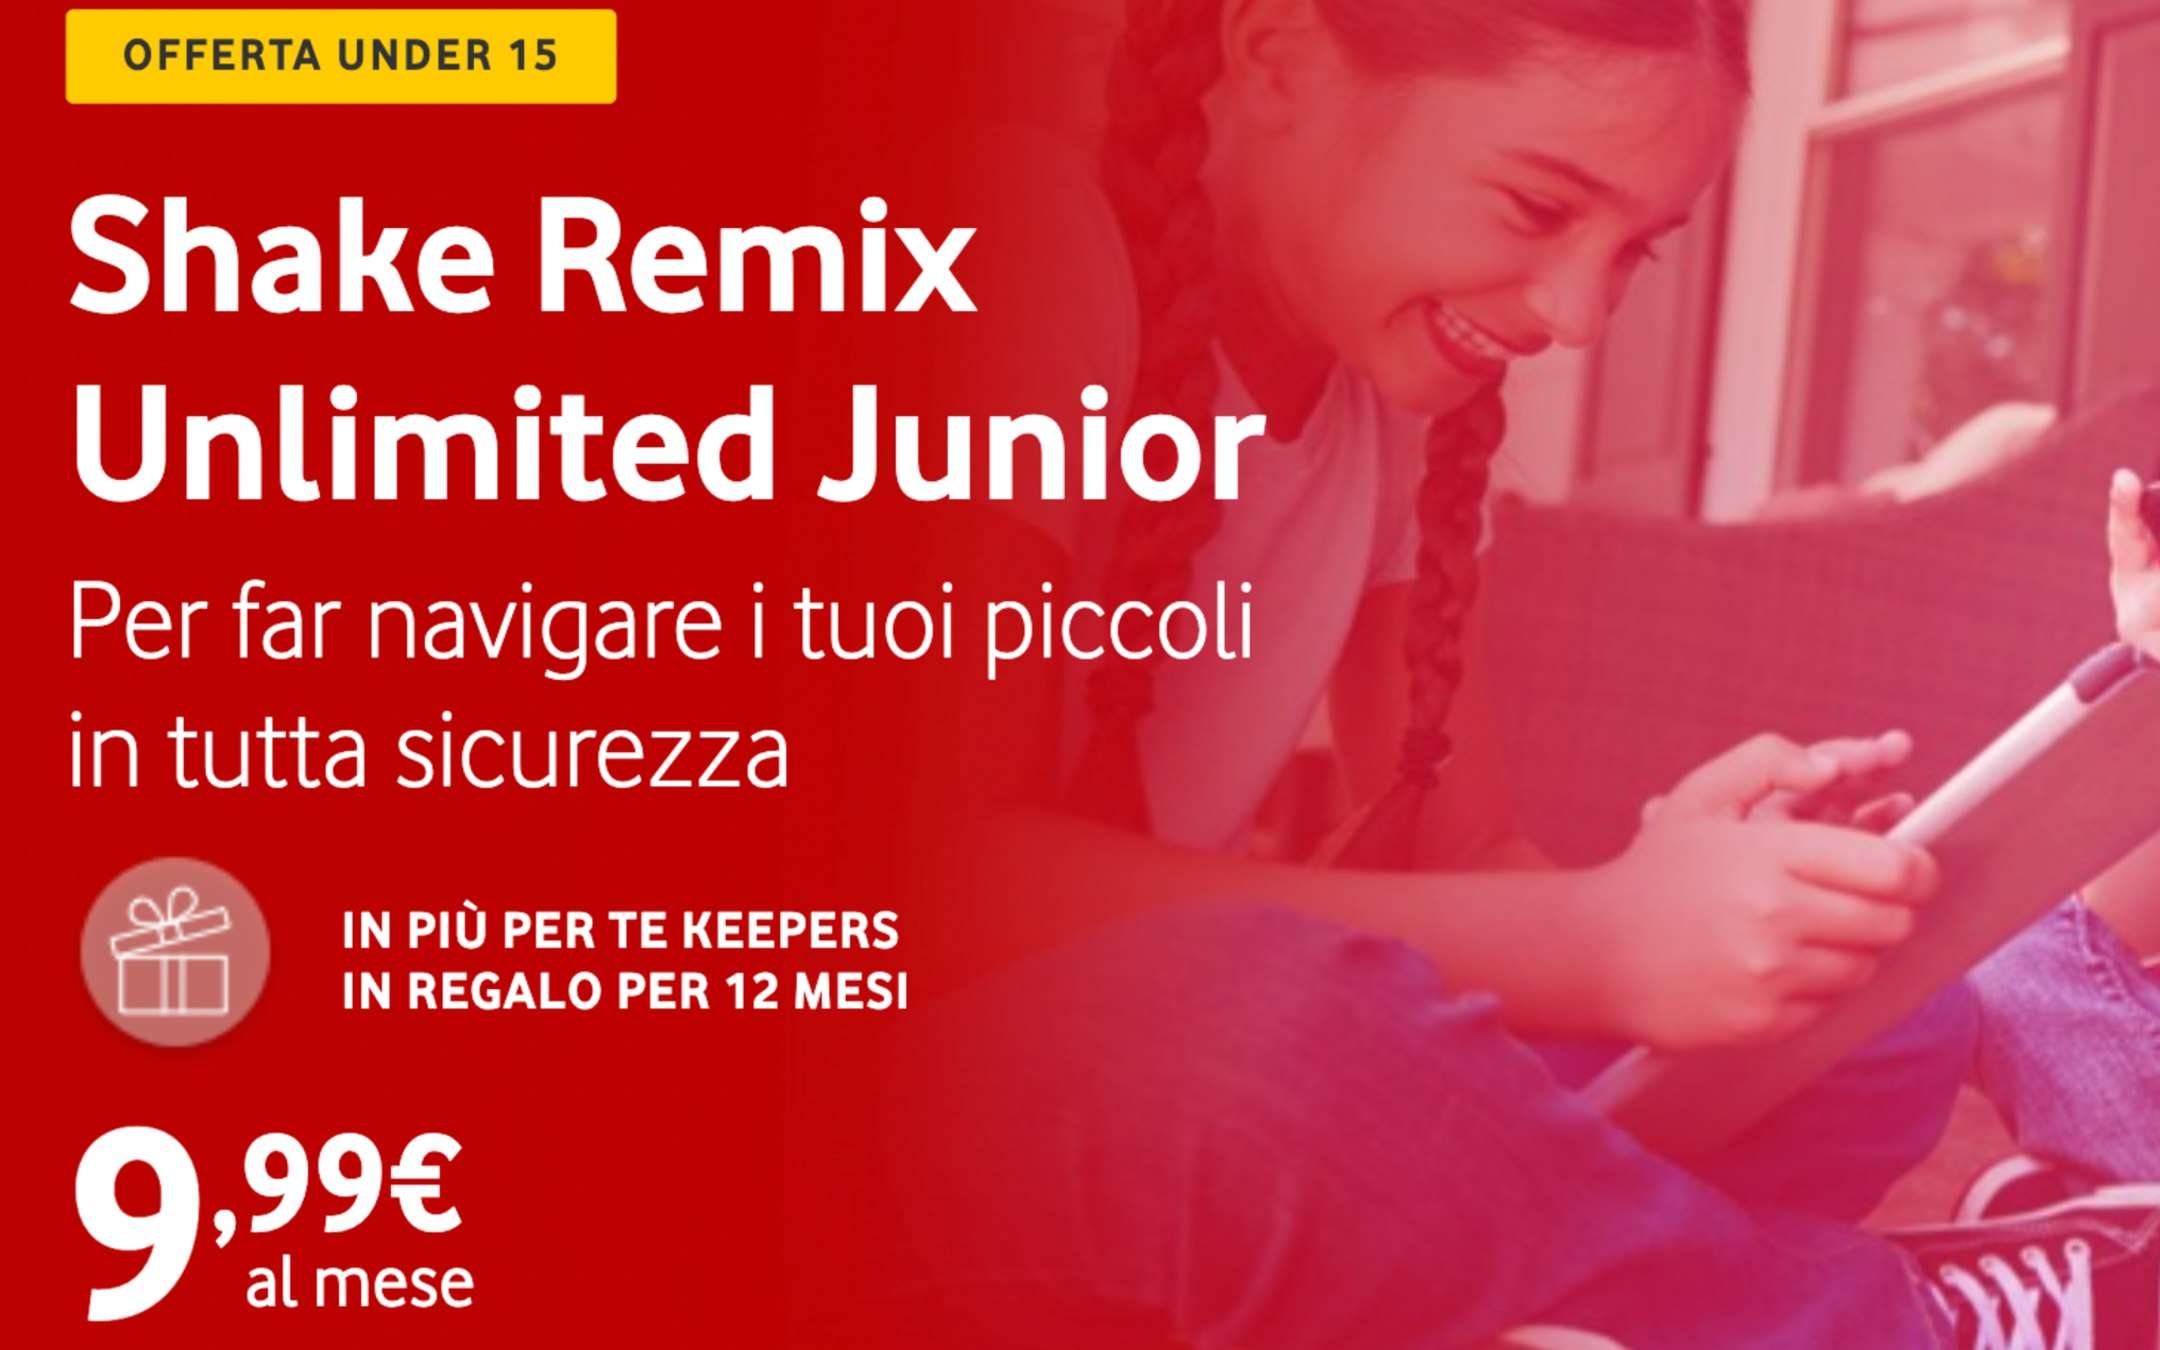 Shake Remix Unlimited Junior: nuova promo Under 15